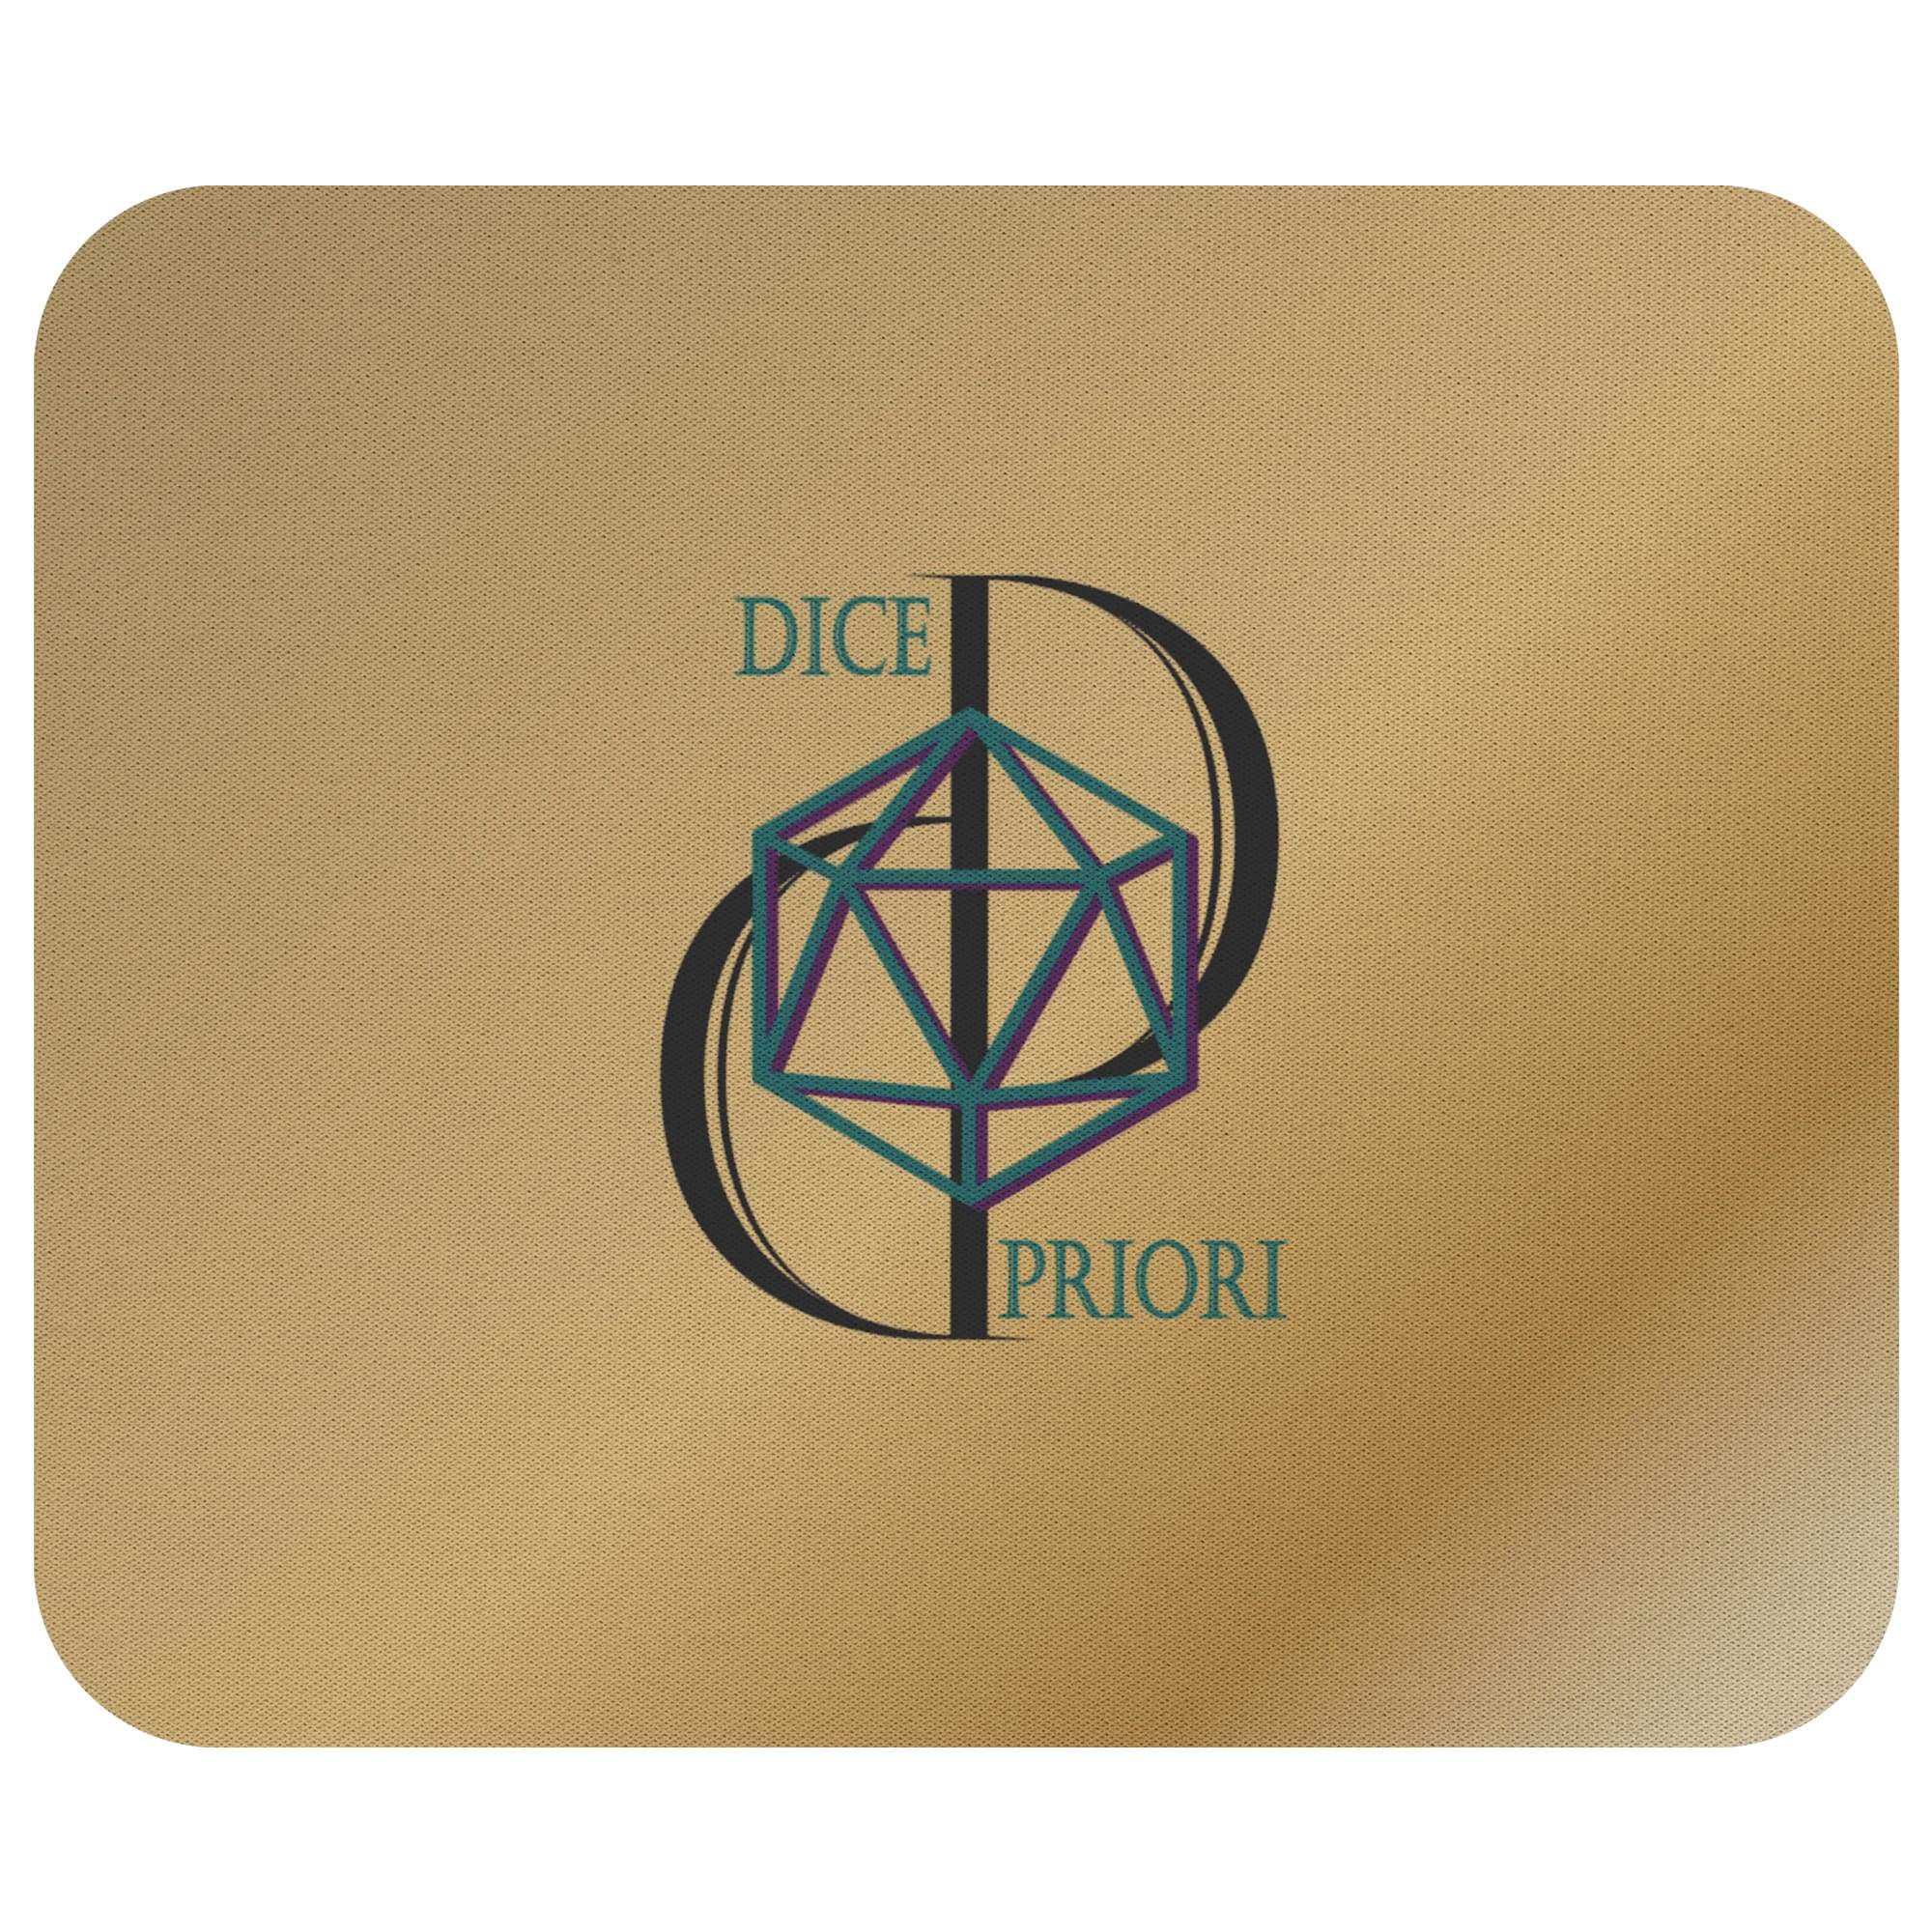 Dice Priori Mousepad (5 Styles) - DP-D2LT-Mou - Mousepads